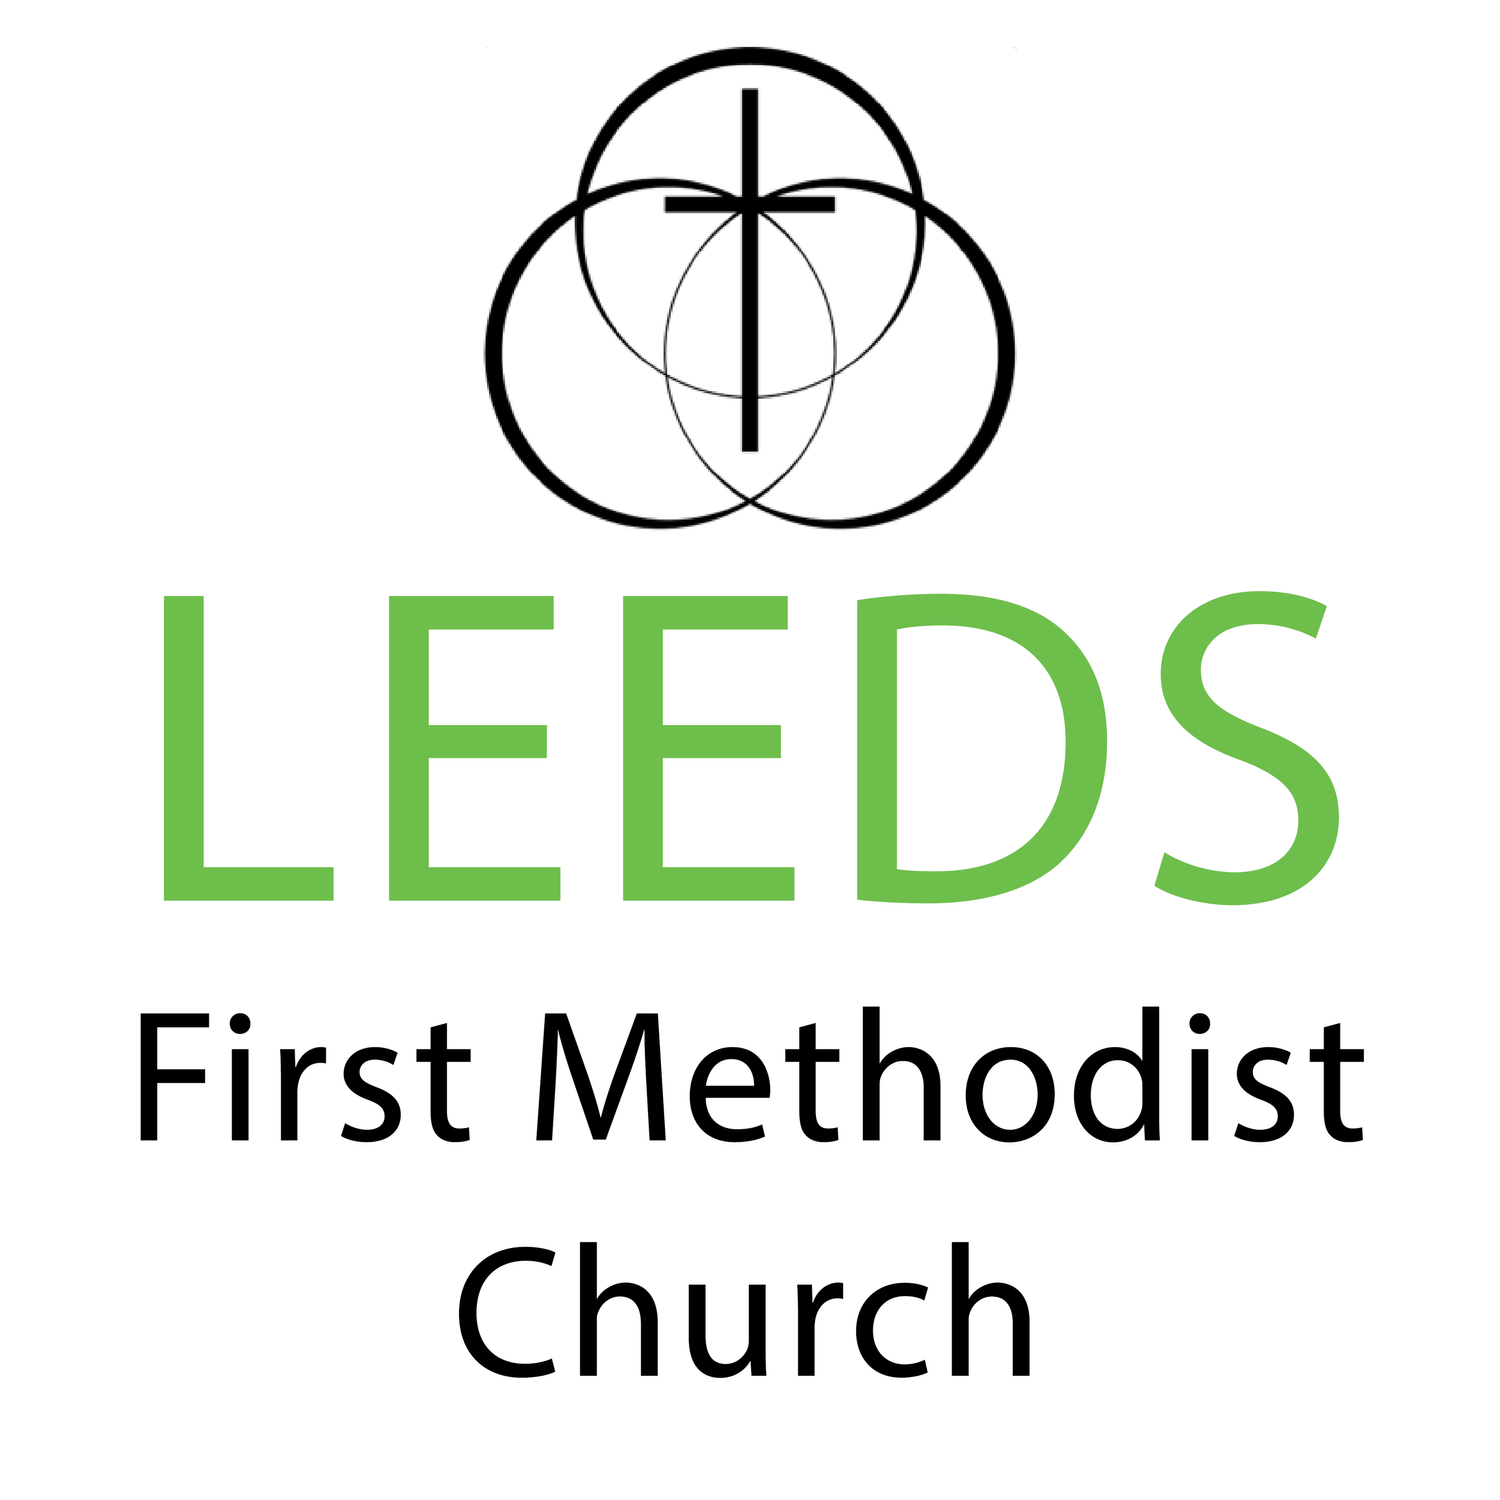 Leeds First Methodist Church